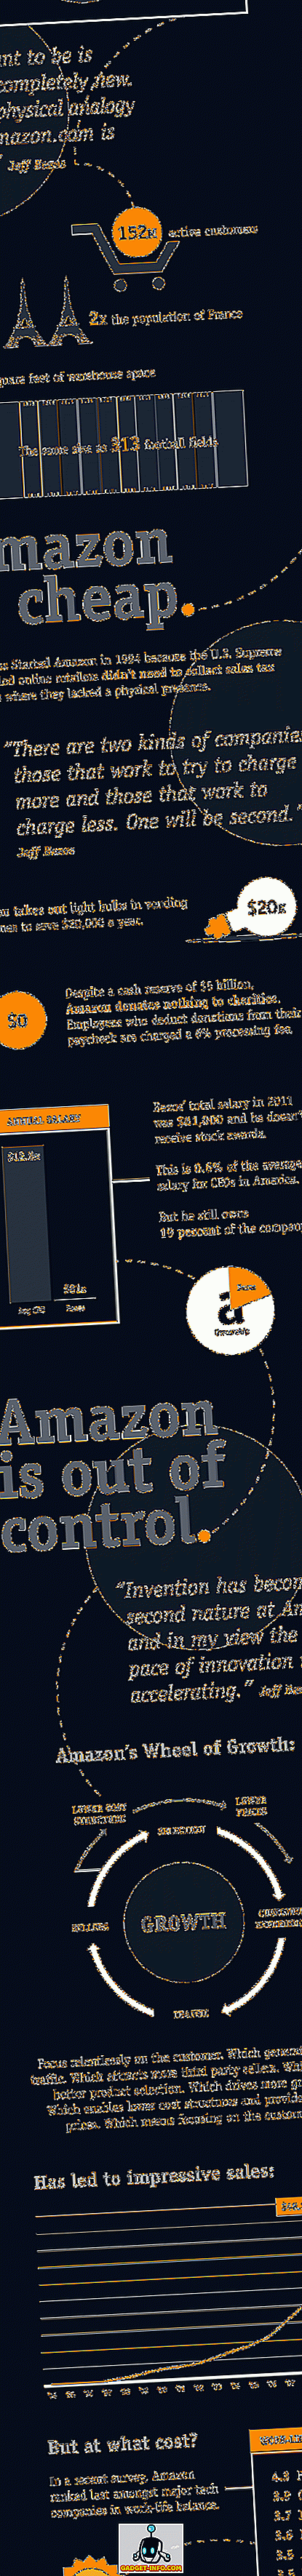 Amazon - Inside Story [Infographic]